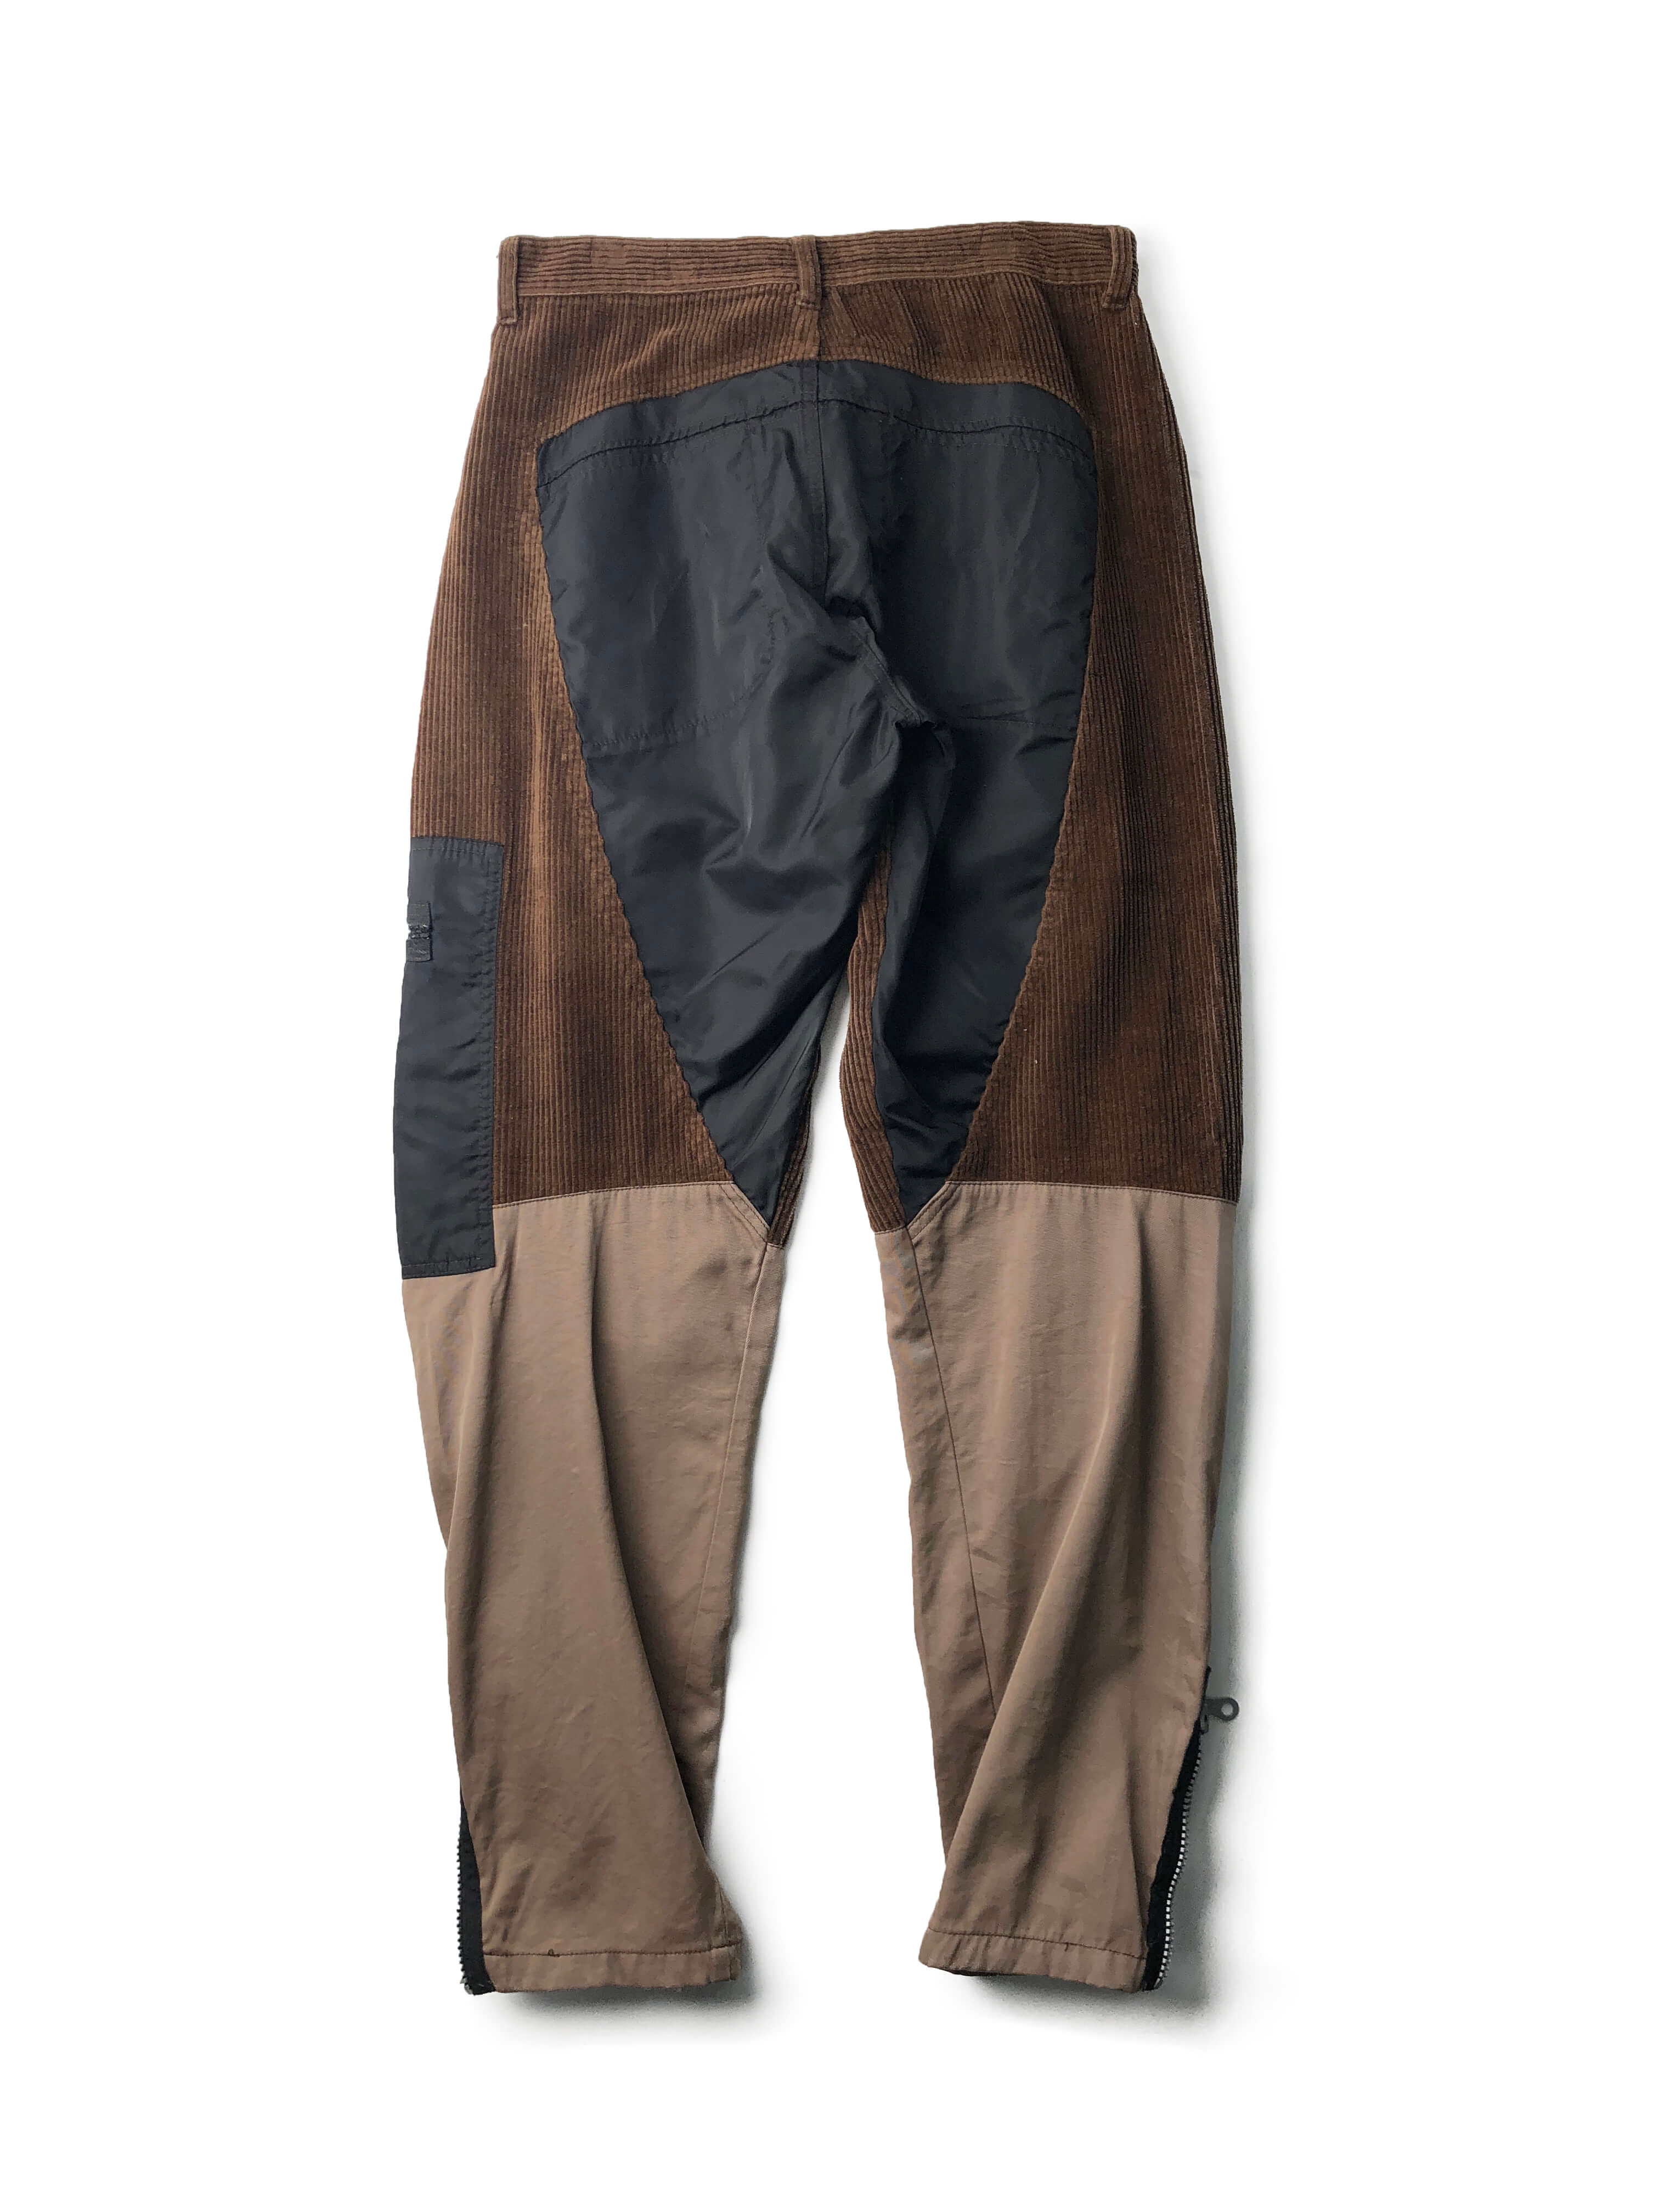 MARITHE FRANCOIS GIRBUAD mixed fabric pants